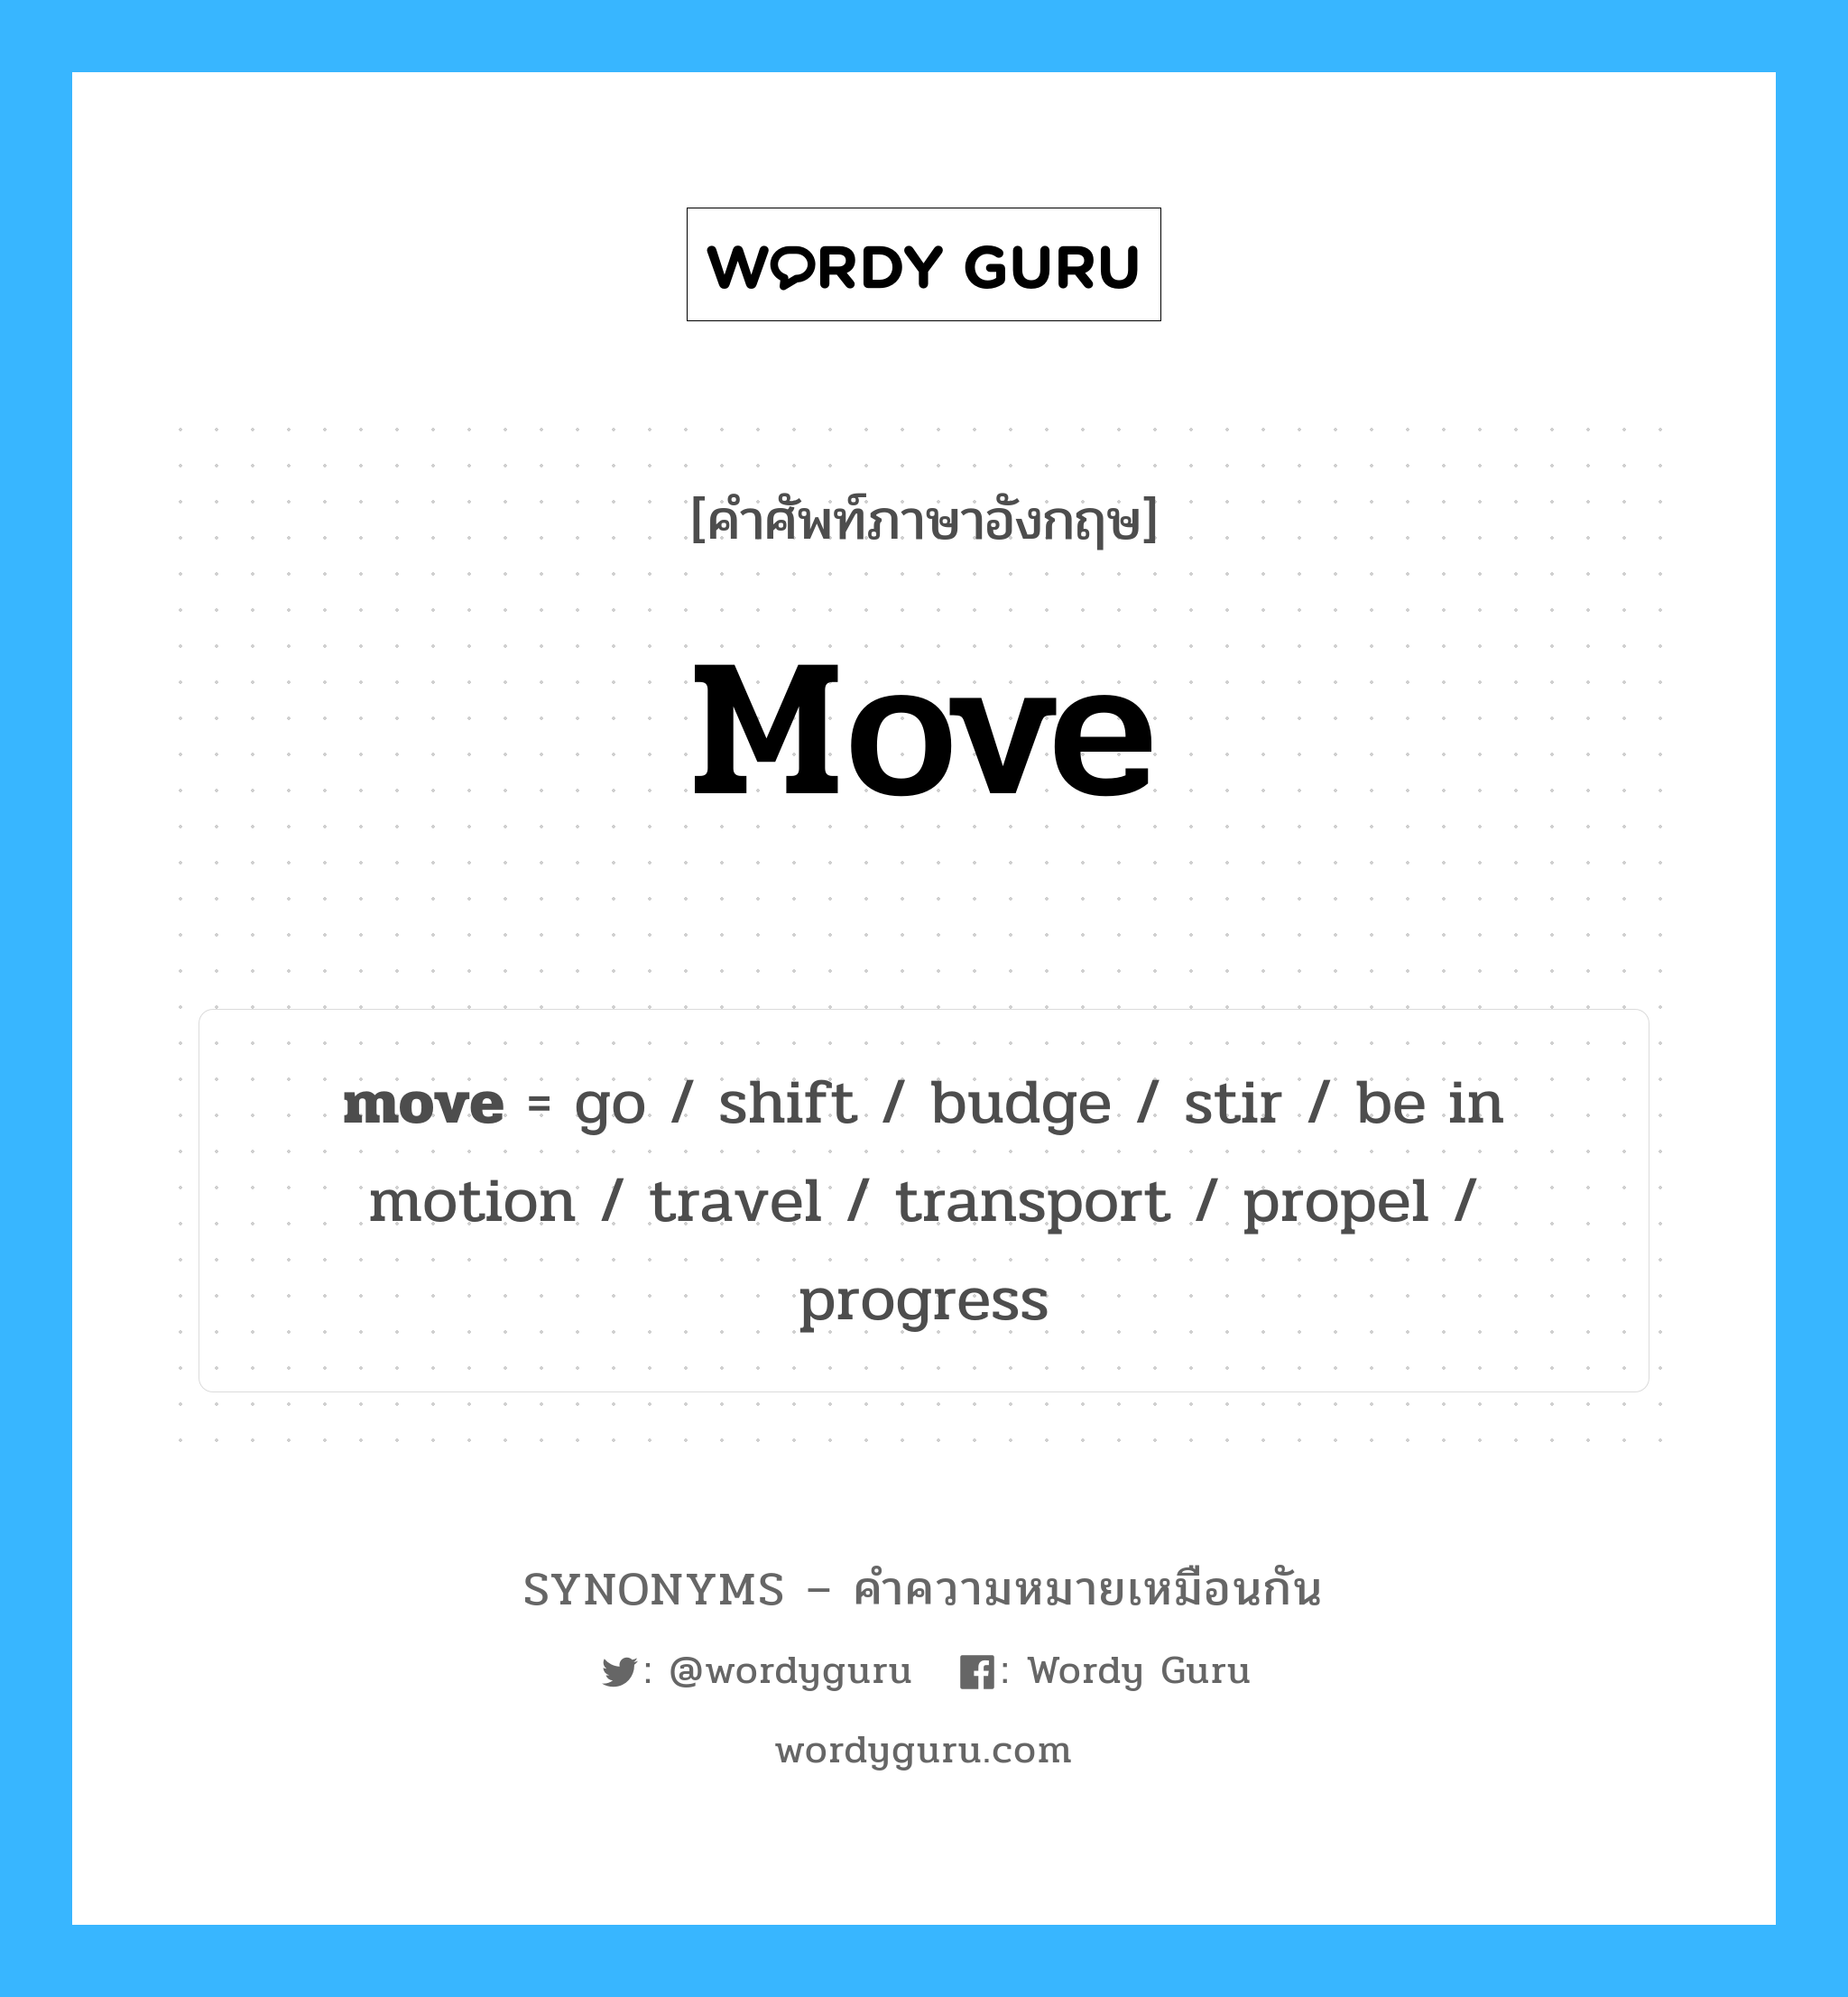 travel เป็นหนึ่งใน move และมีคำอื่น ๆ อีกดังนี้, คำศัพท์ภาษาอังกฤษ travel ความหมายคล้ายกันกับ move แปลว่า ท่องเที่ยว หมวด move